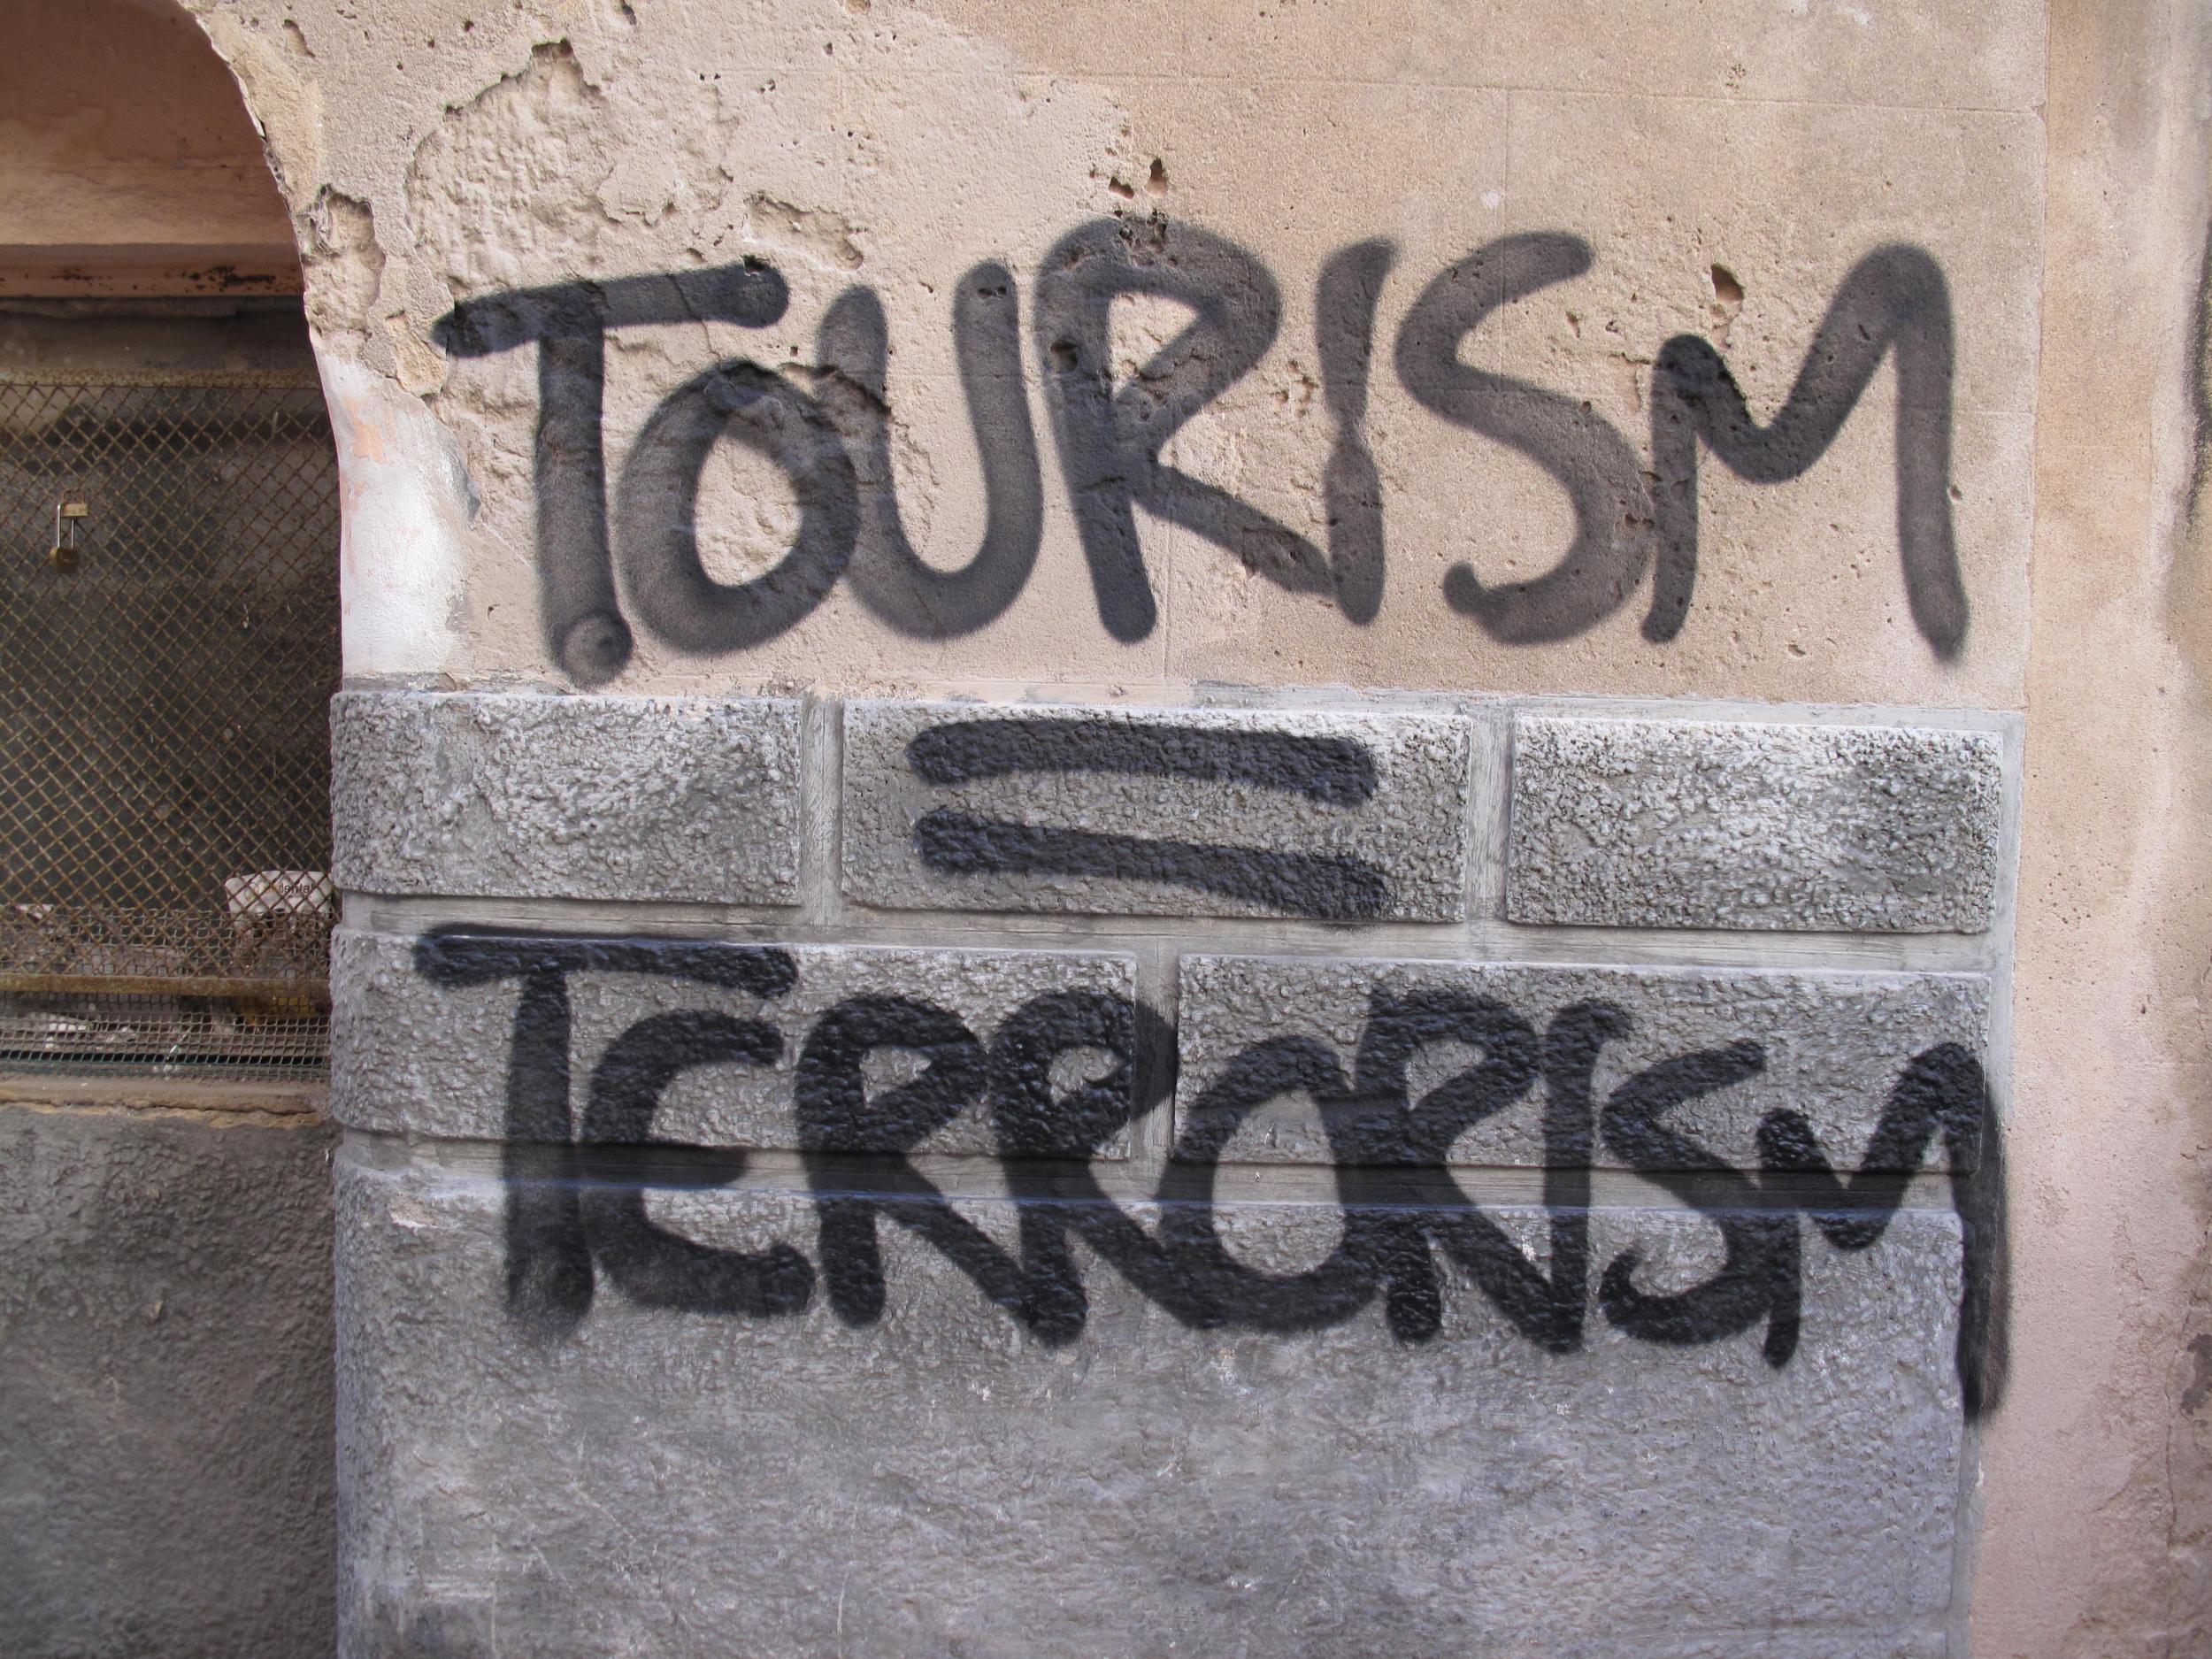 Good riddance? A slogan spray-painted on a wall in Palma de Mallorca